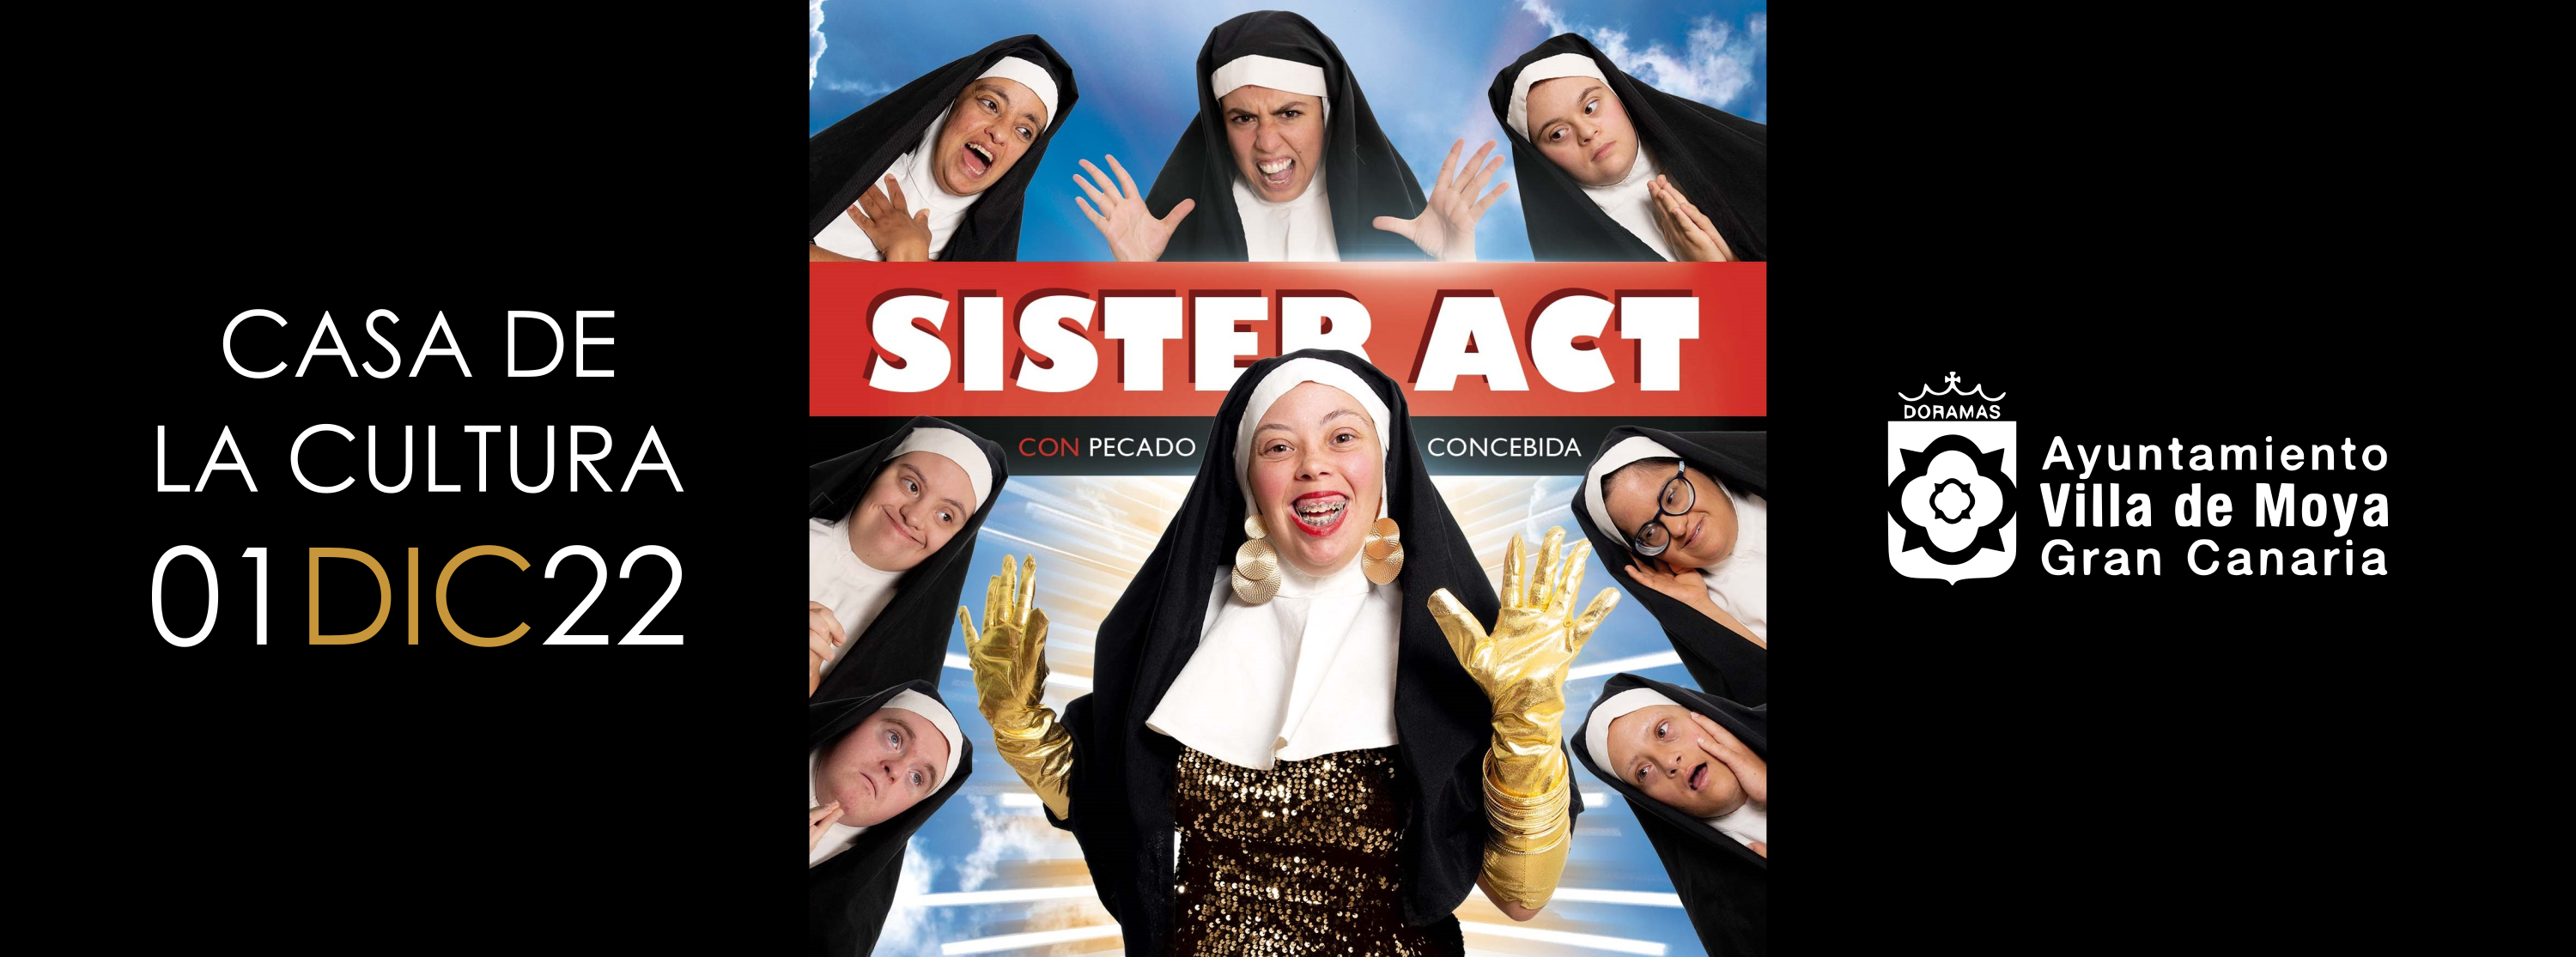 Cartel del estreno de Sister Act en la Casa de la Cultura de Moya